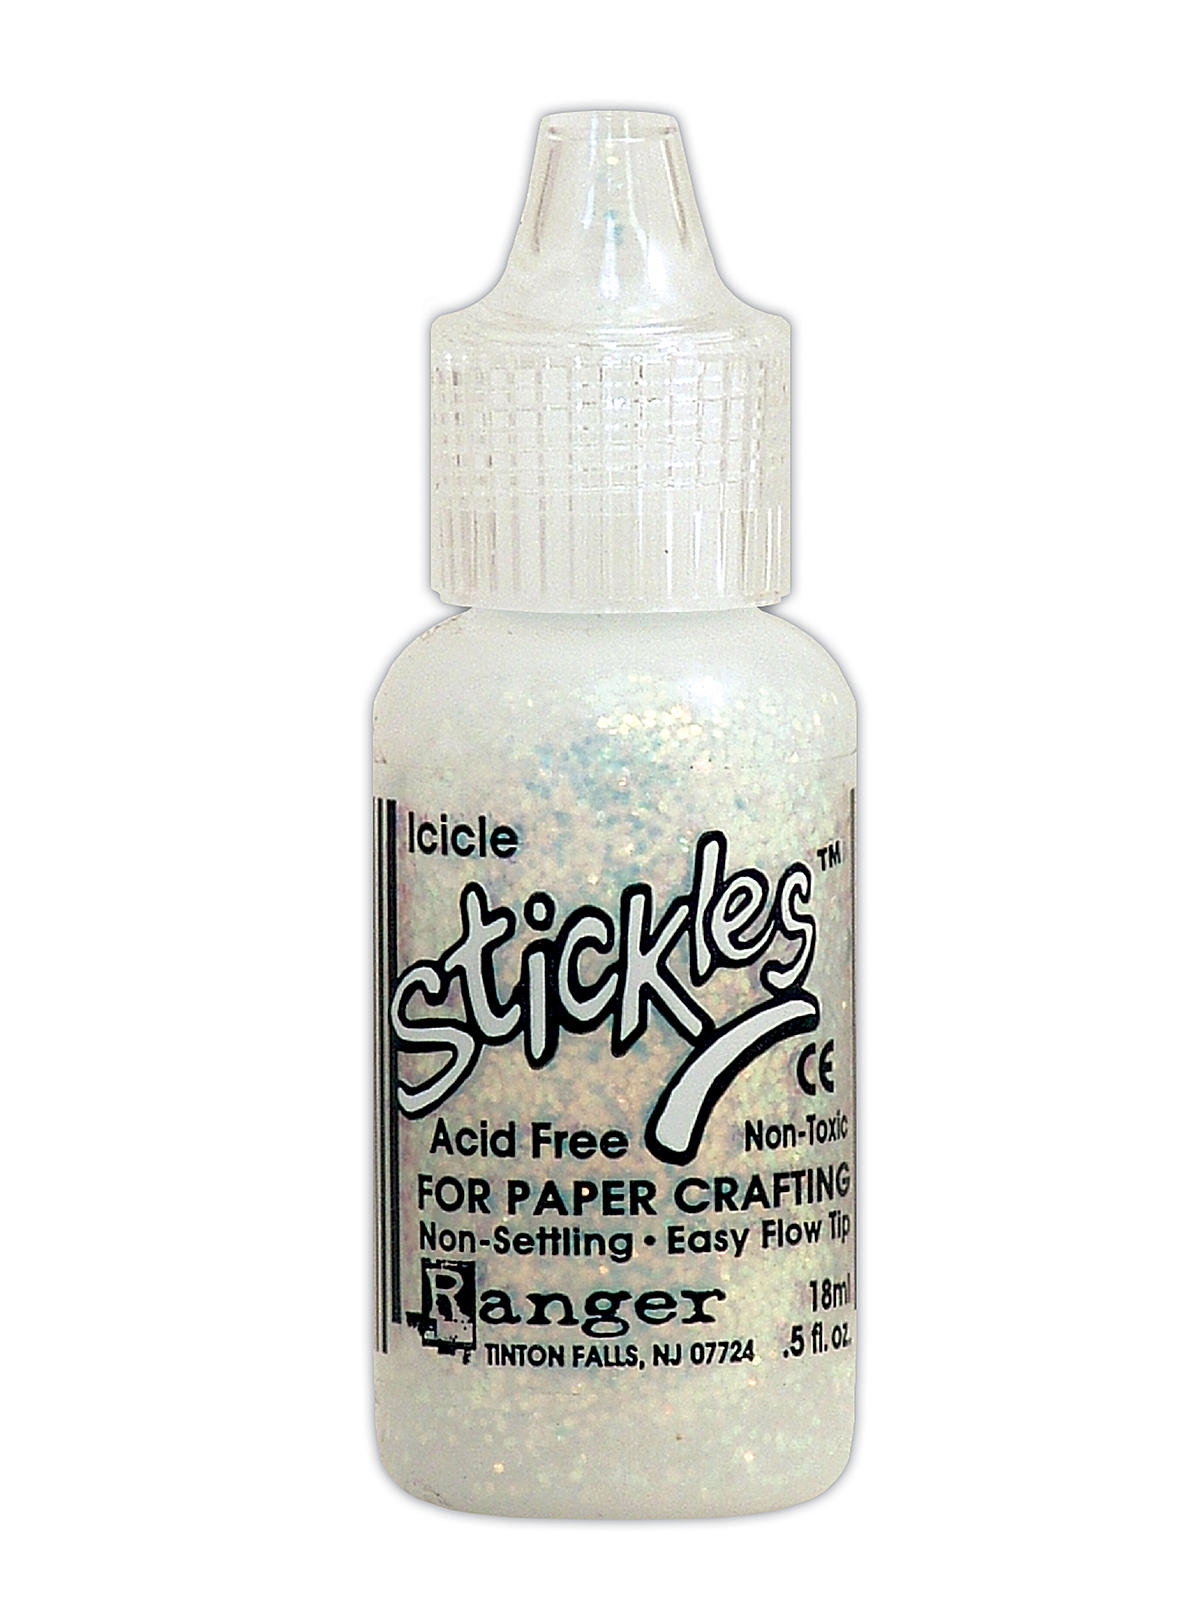 Stickles Glitter Glue .5oz (Silver), Ranger